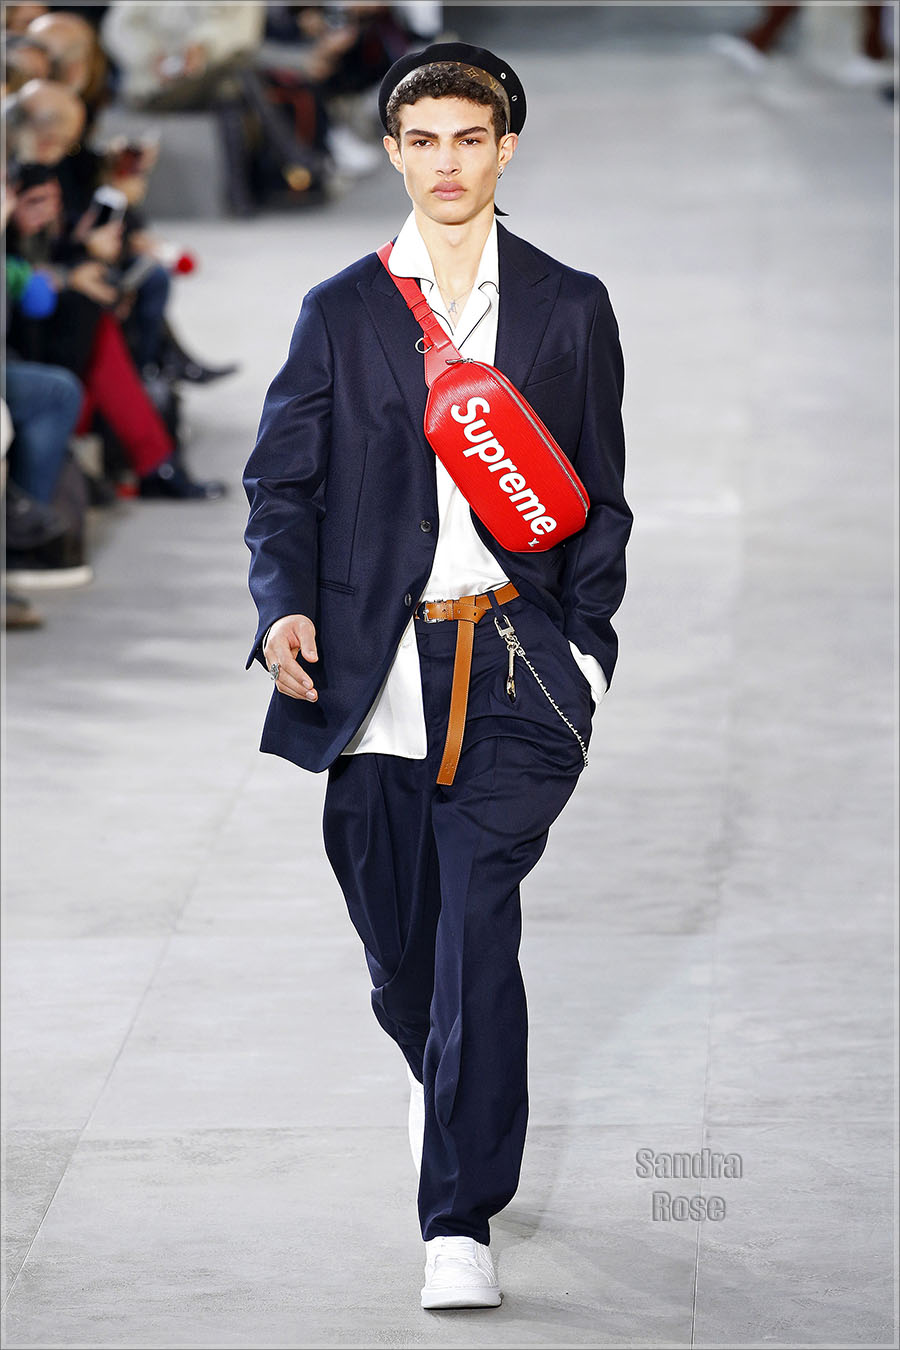 PICS: Louis Vuitton Menswear Runway Show at Paris Fashion Week